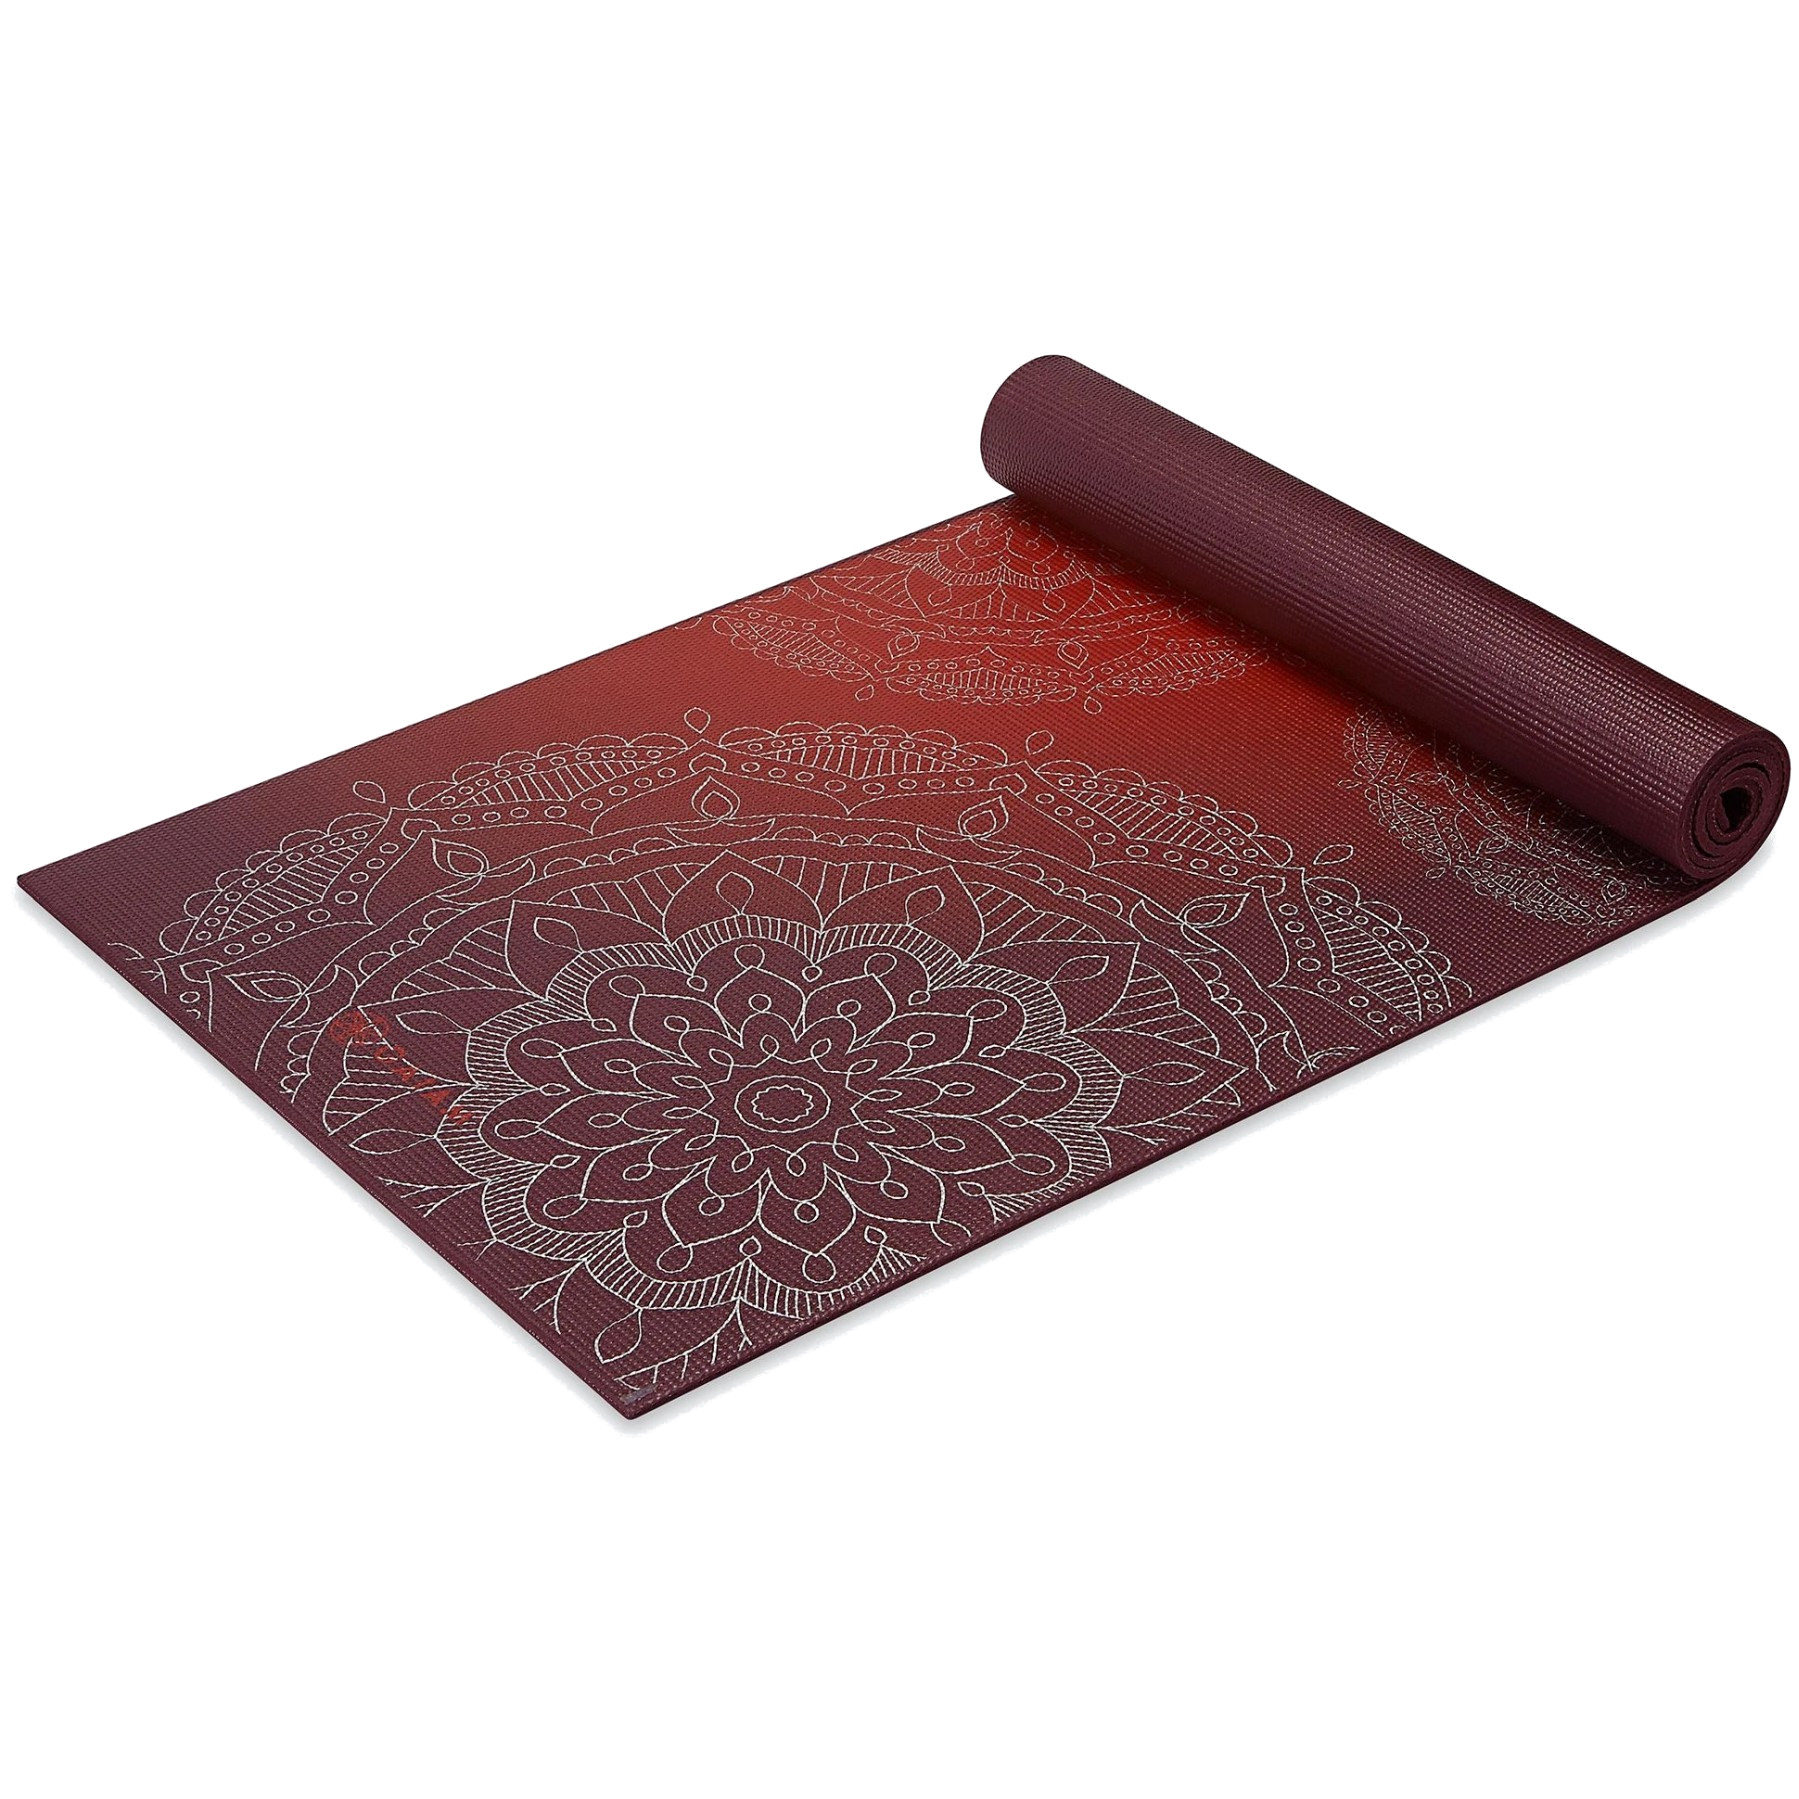 Productfoto van Gaiam Premium Yoga Mat (6mm) - Metallic Sunset